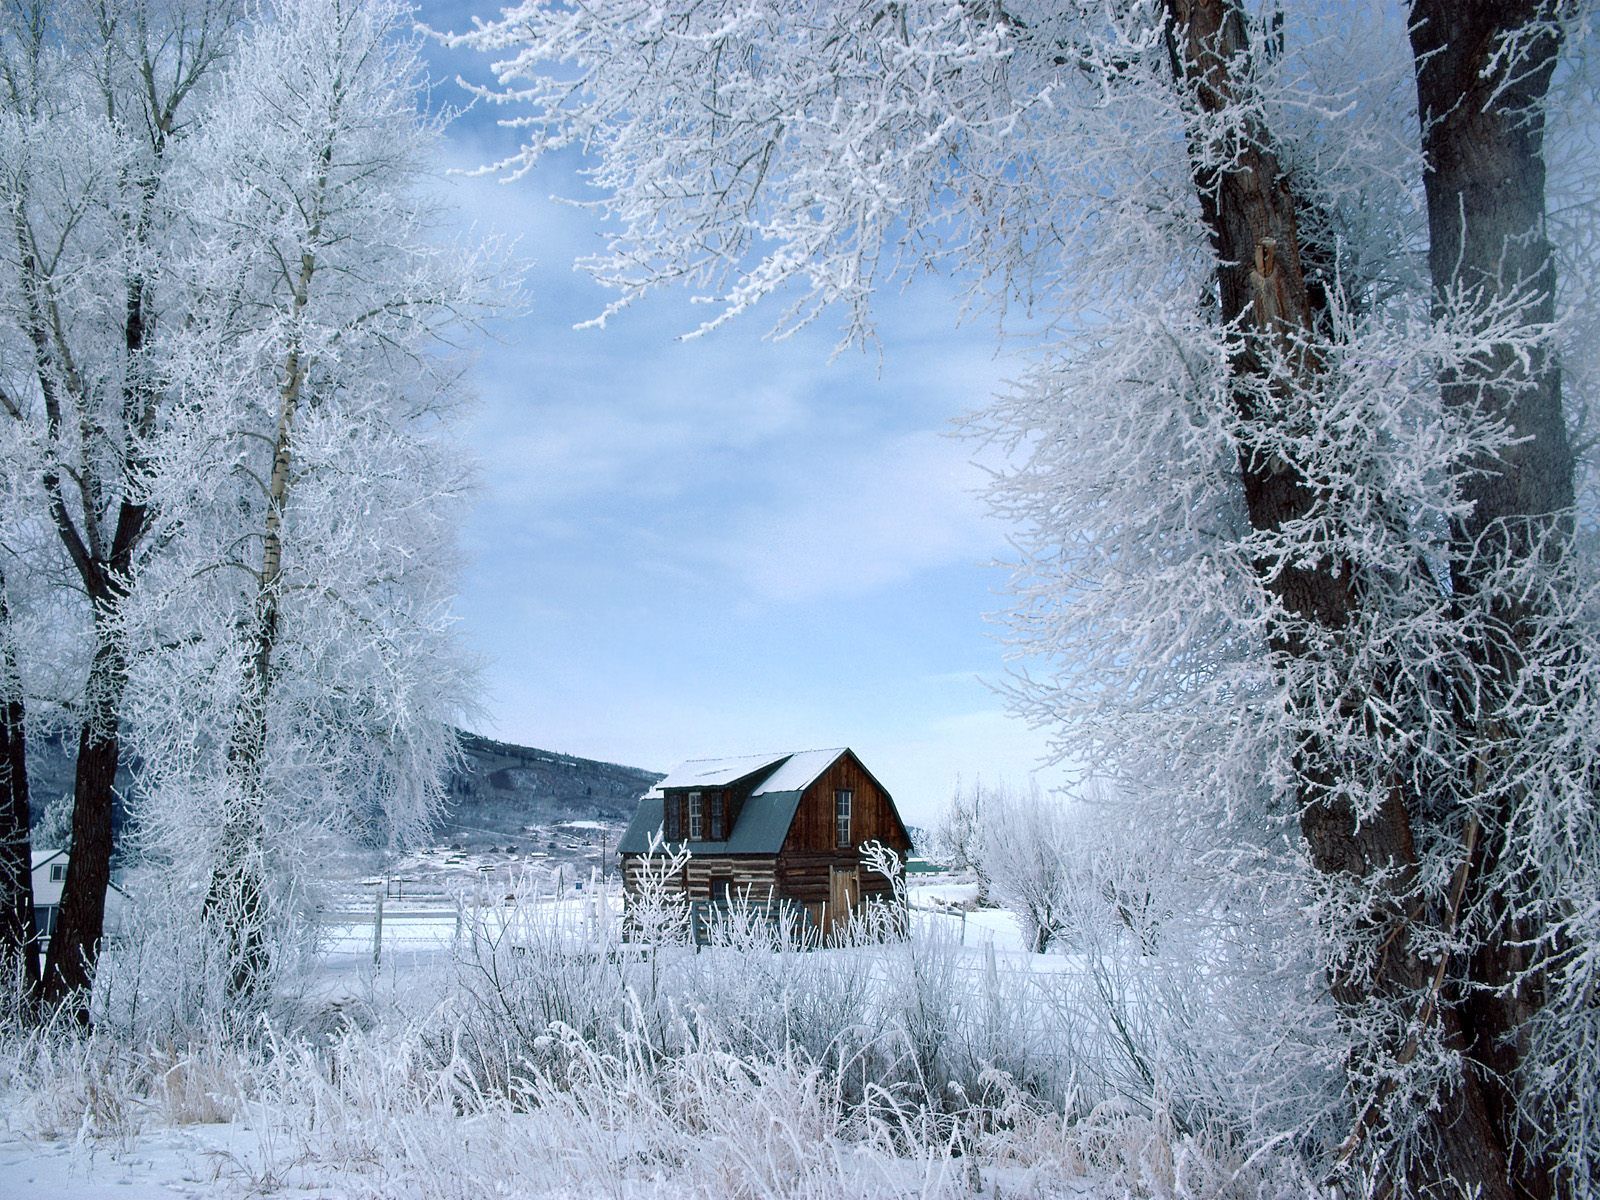 Winter Wonderland Steamboat Springs Colorado photo or wallpaper